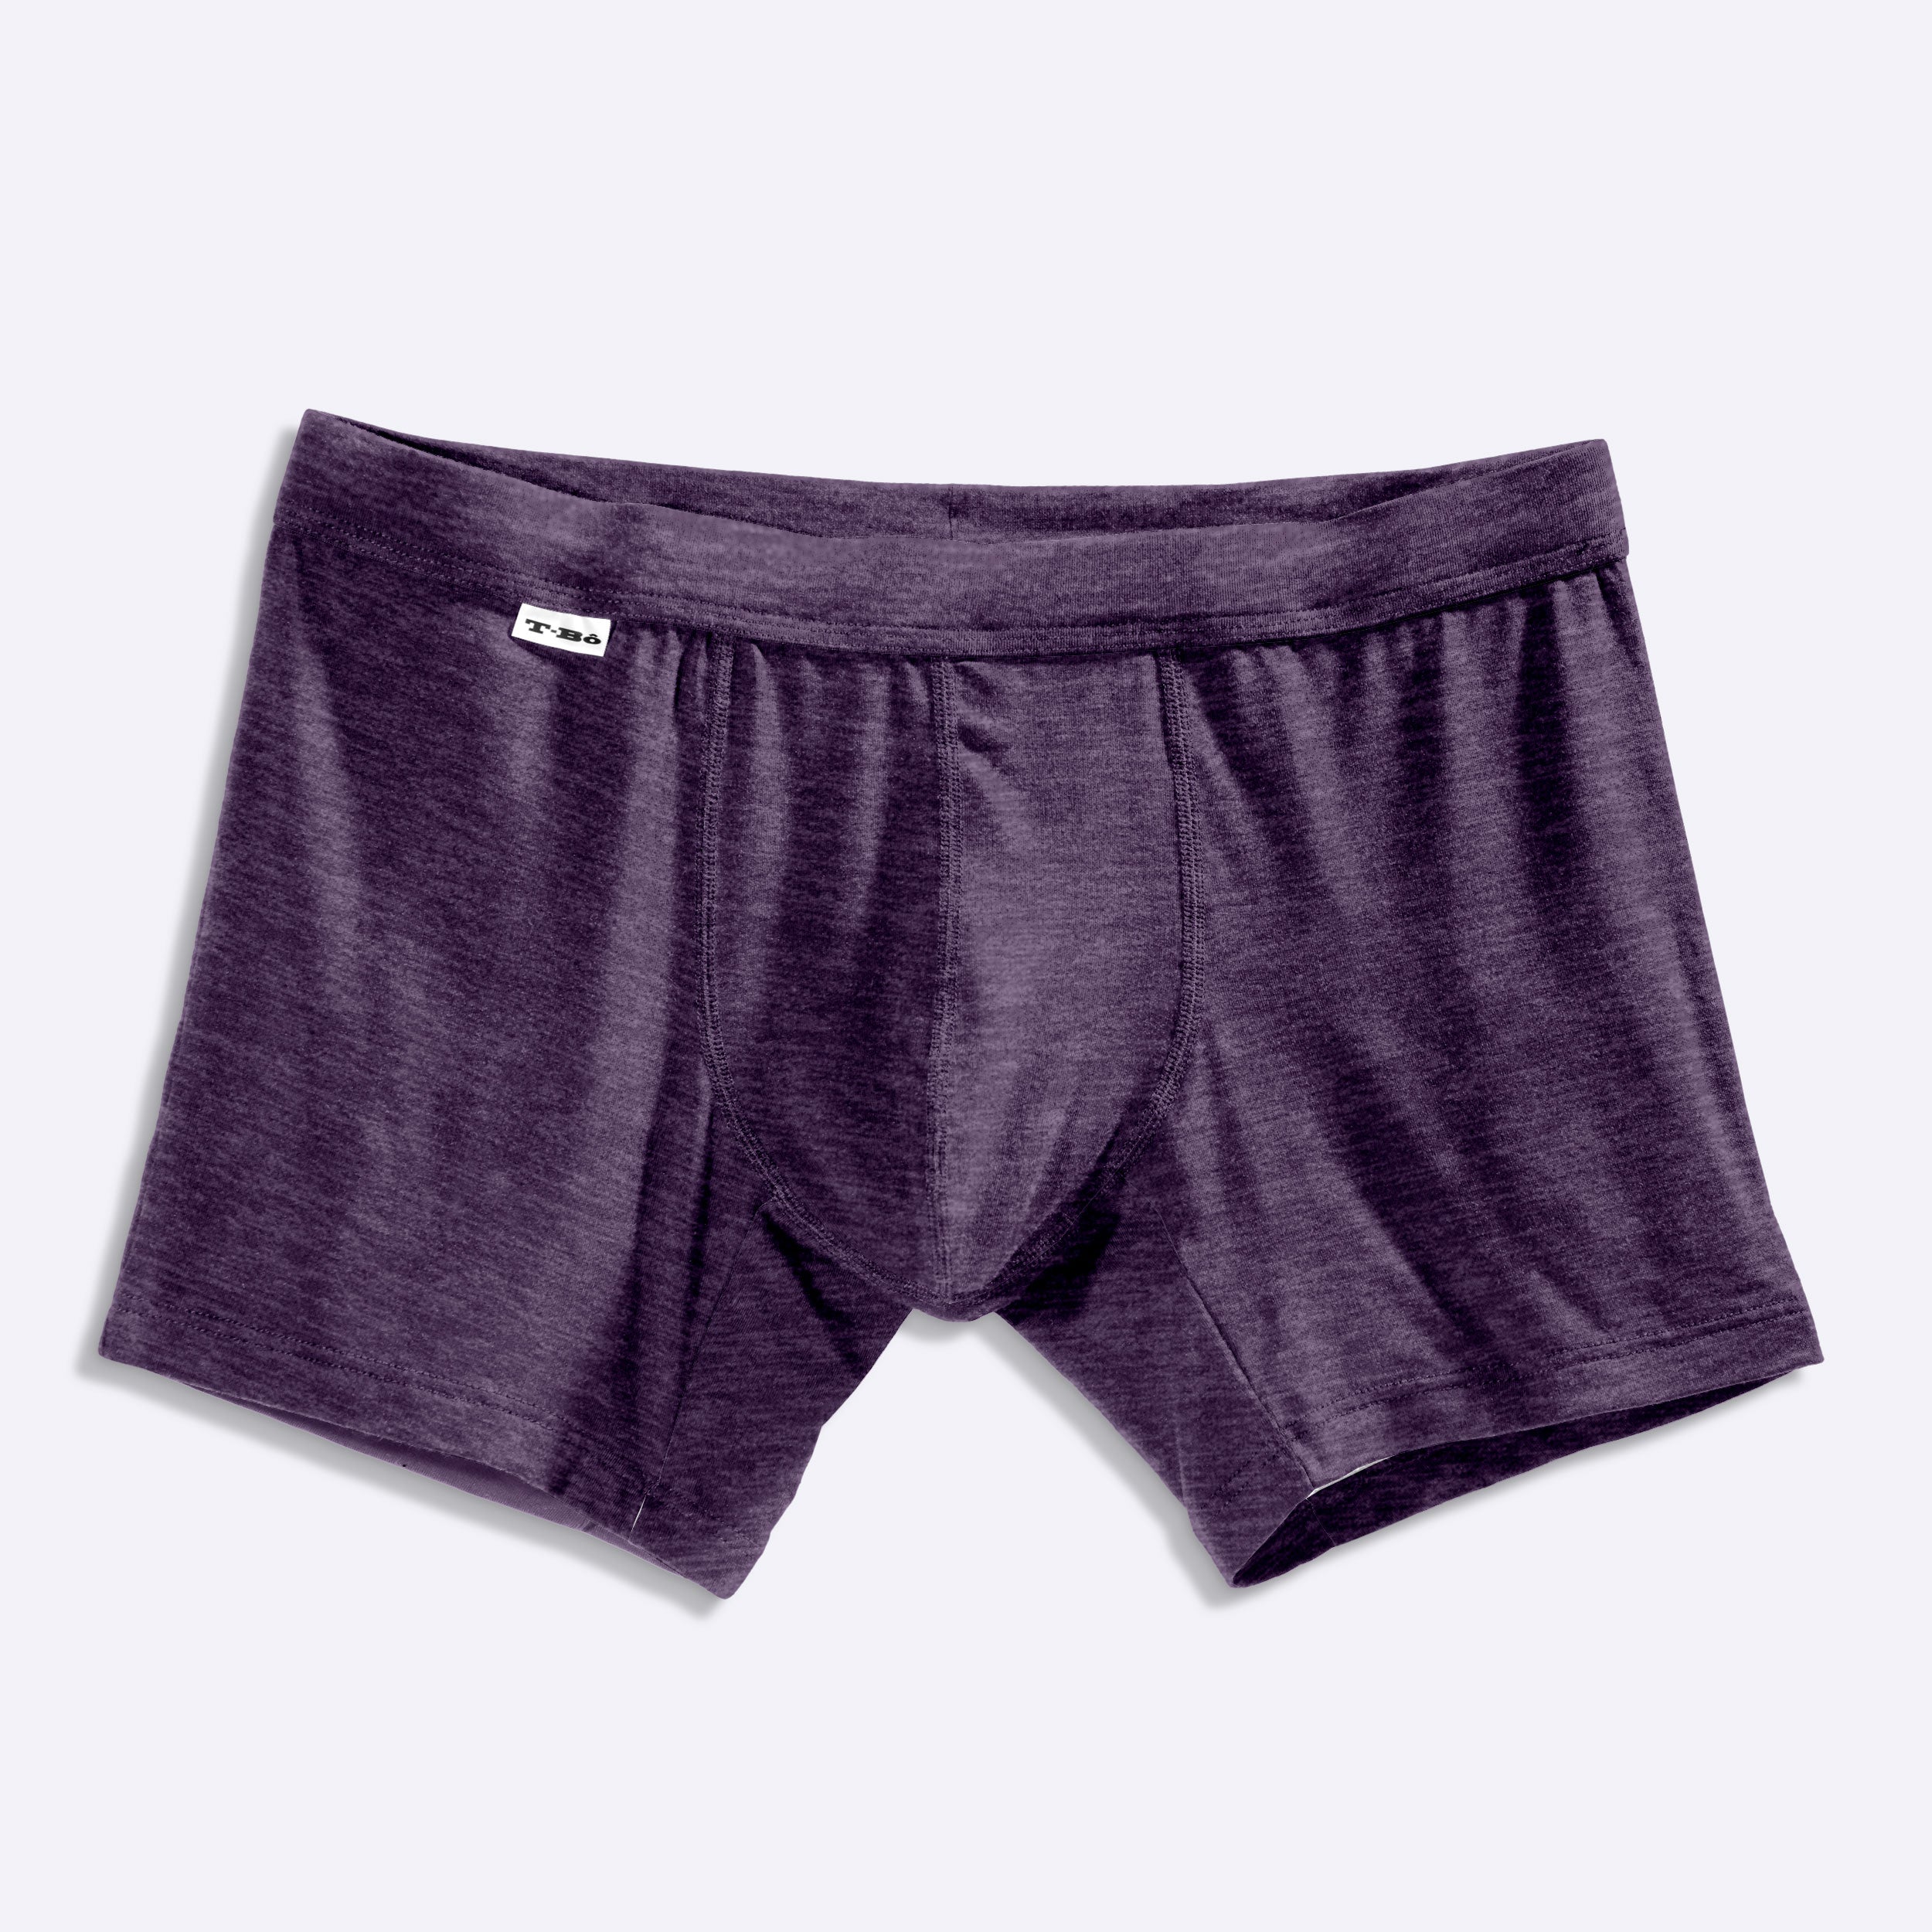 The Acai Purple Heather Boxer Brief – TBo underwear